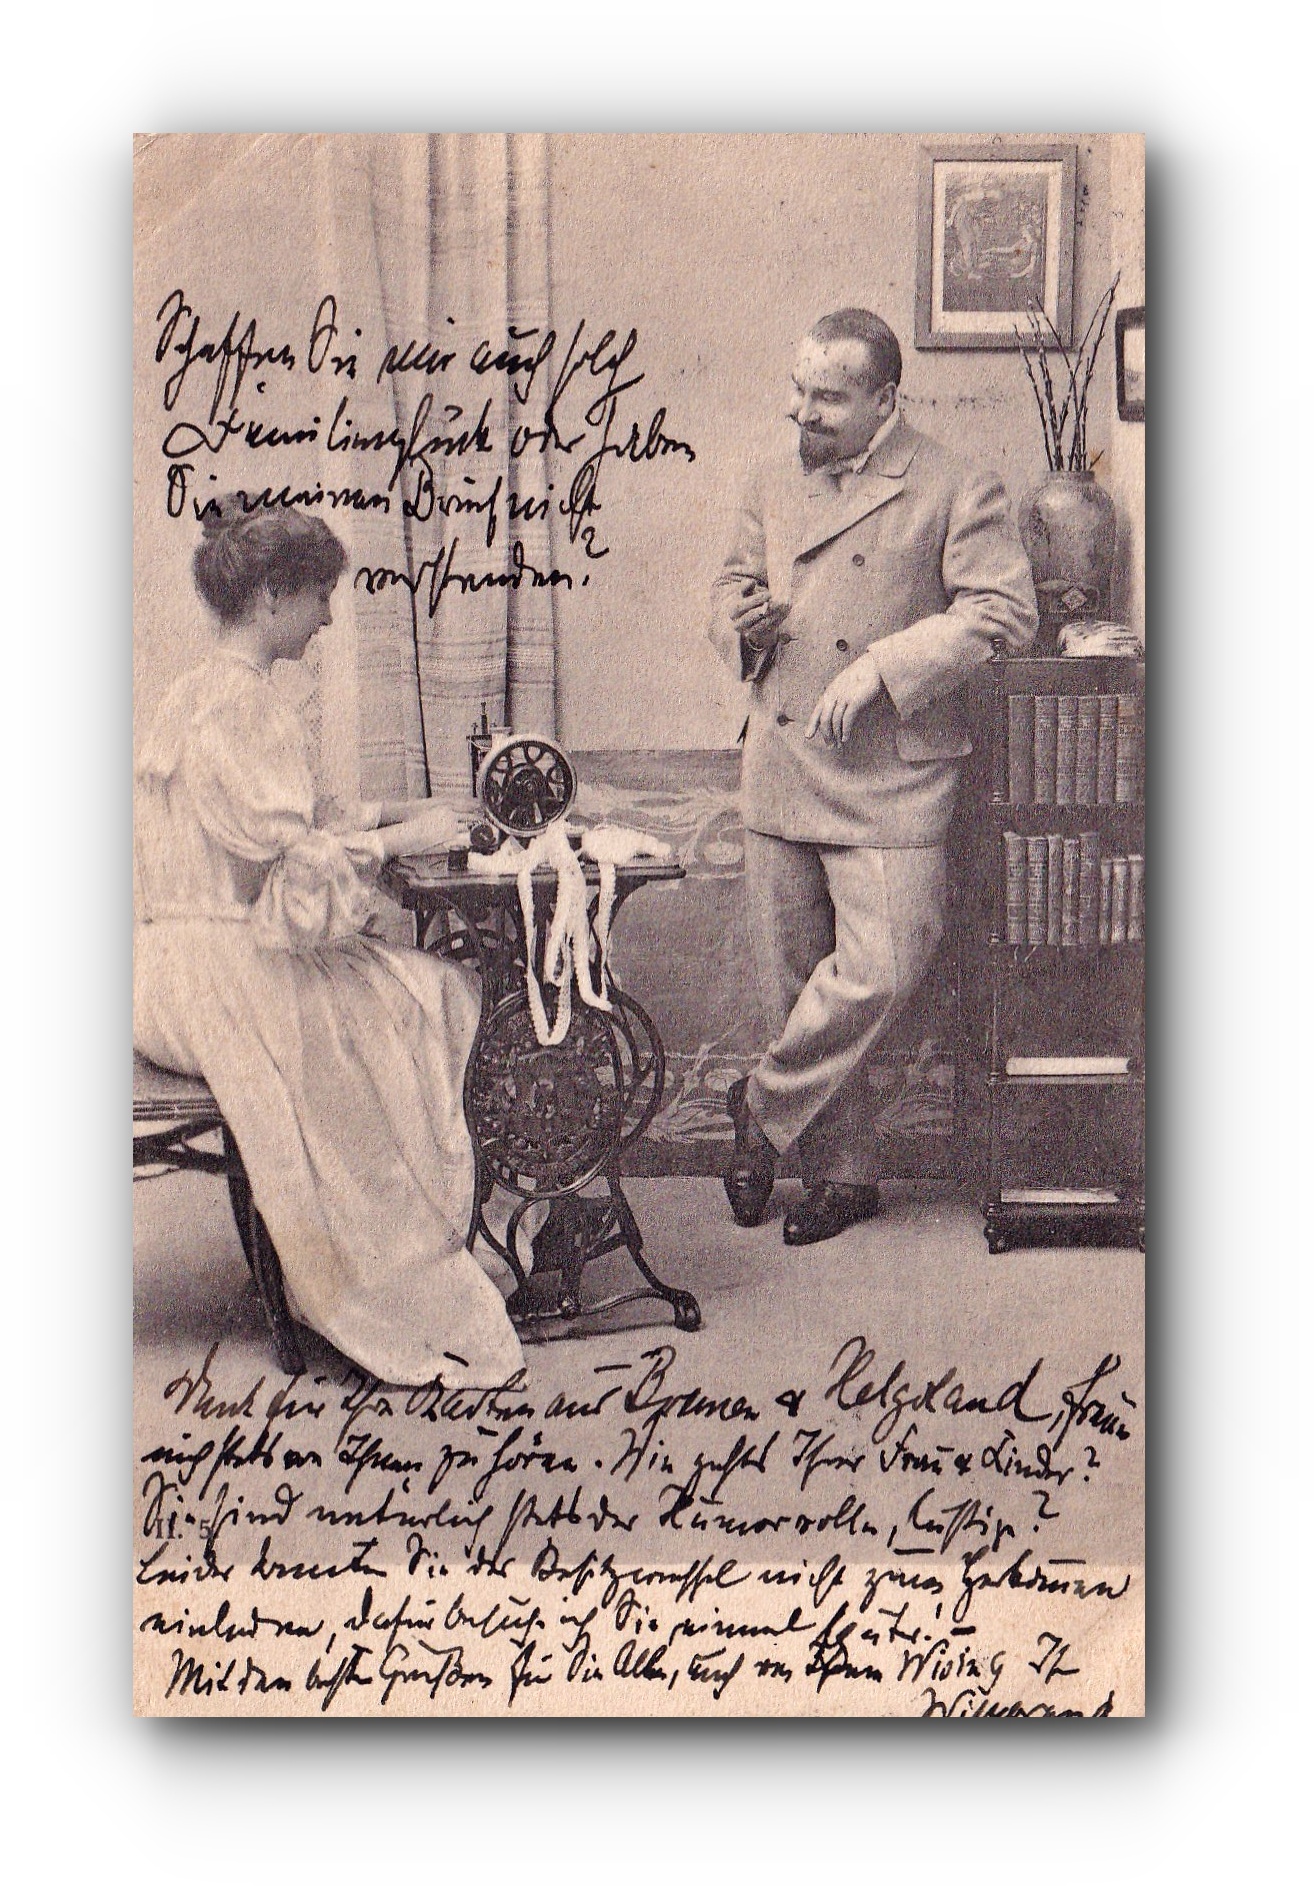 Die Näherin - 08.08.1908 - La couturière - The seamstress